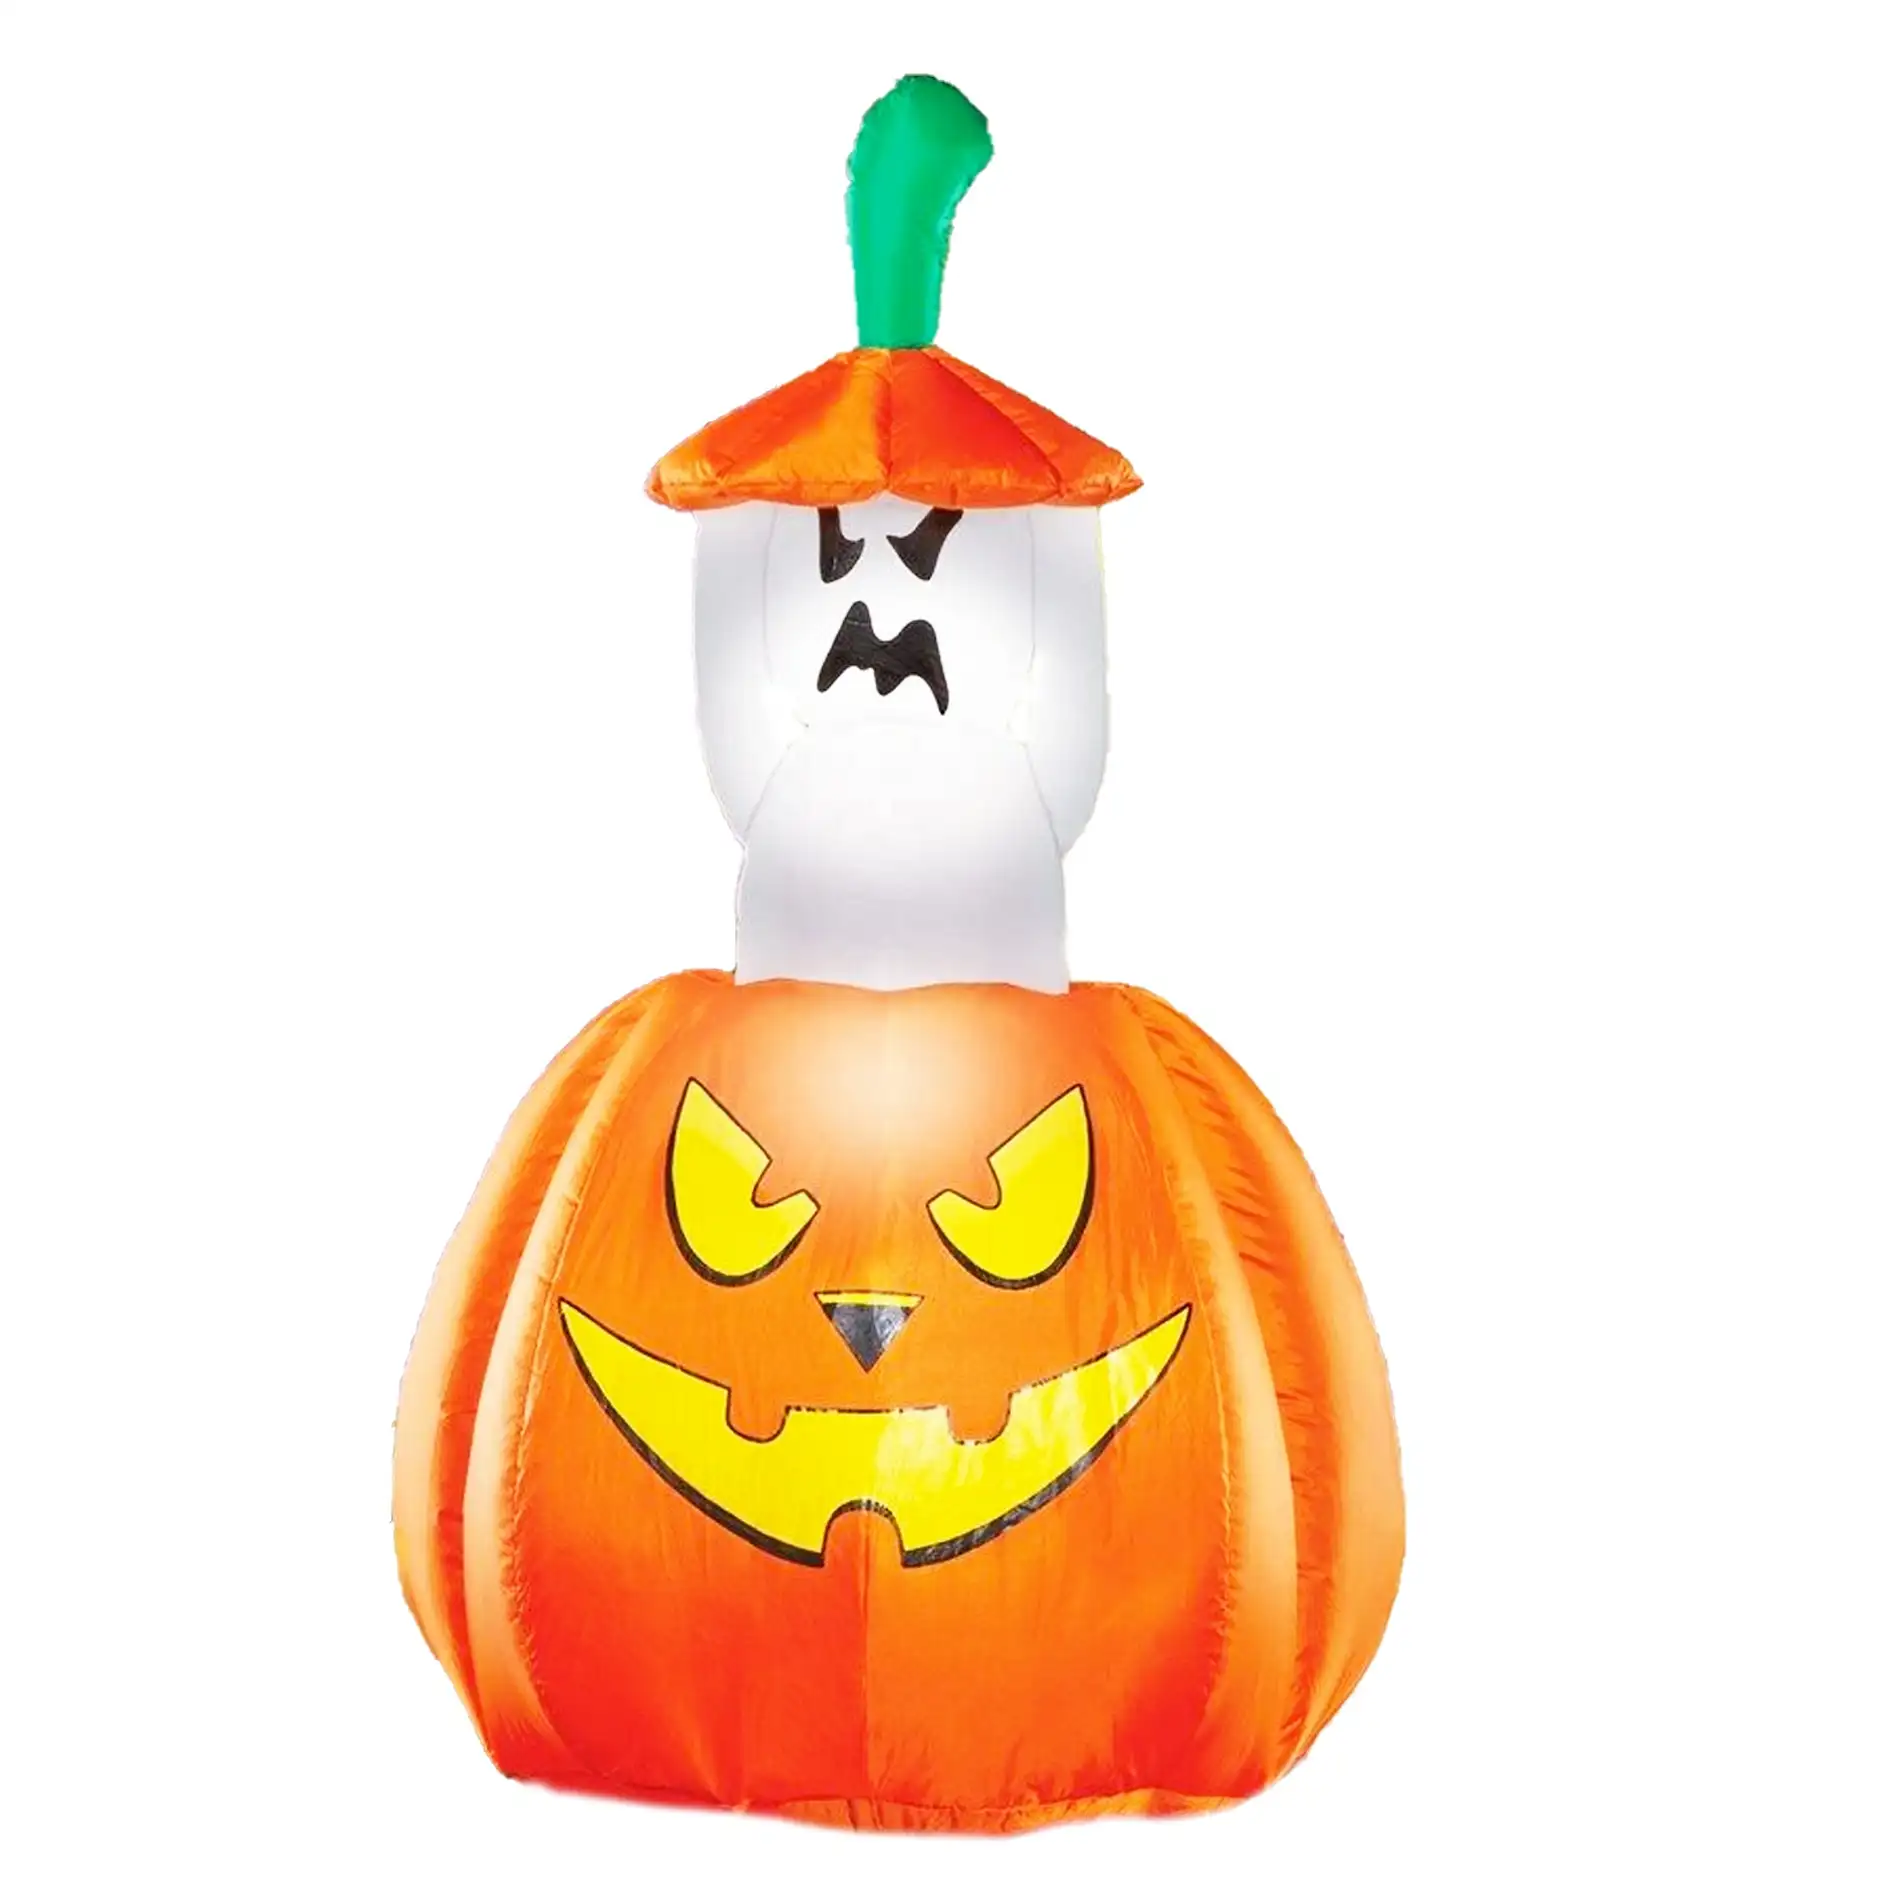 Custom inflatable pumpkin ghosts pop up ghost Halloween decorations